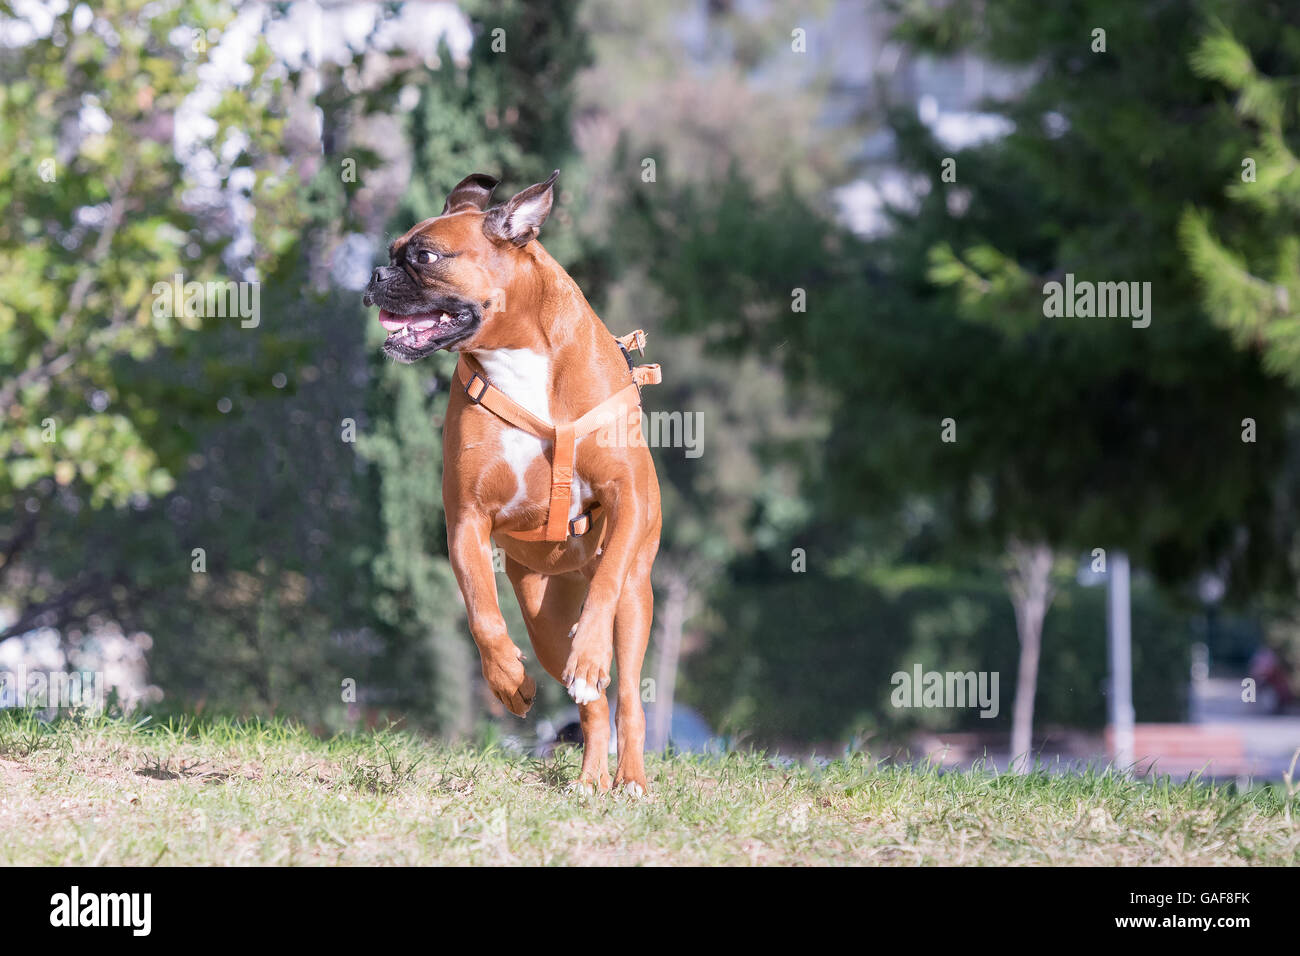 German boxer running and jumping at a park. Stock Photo